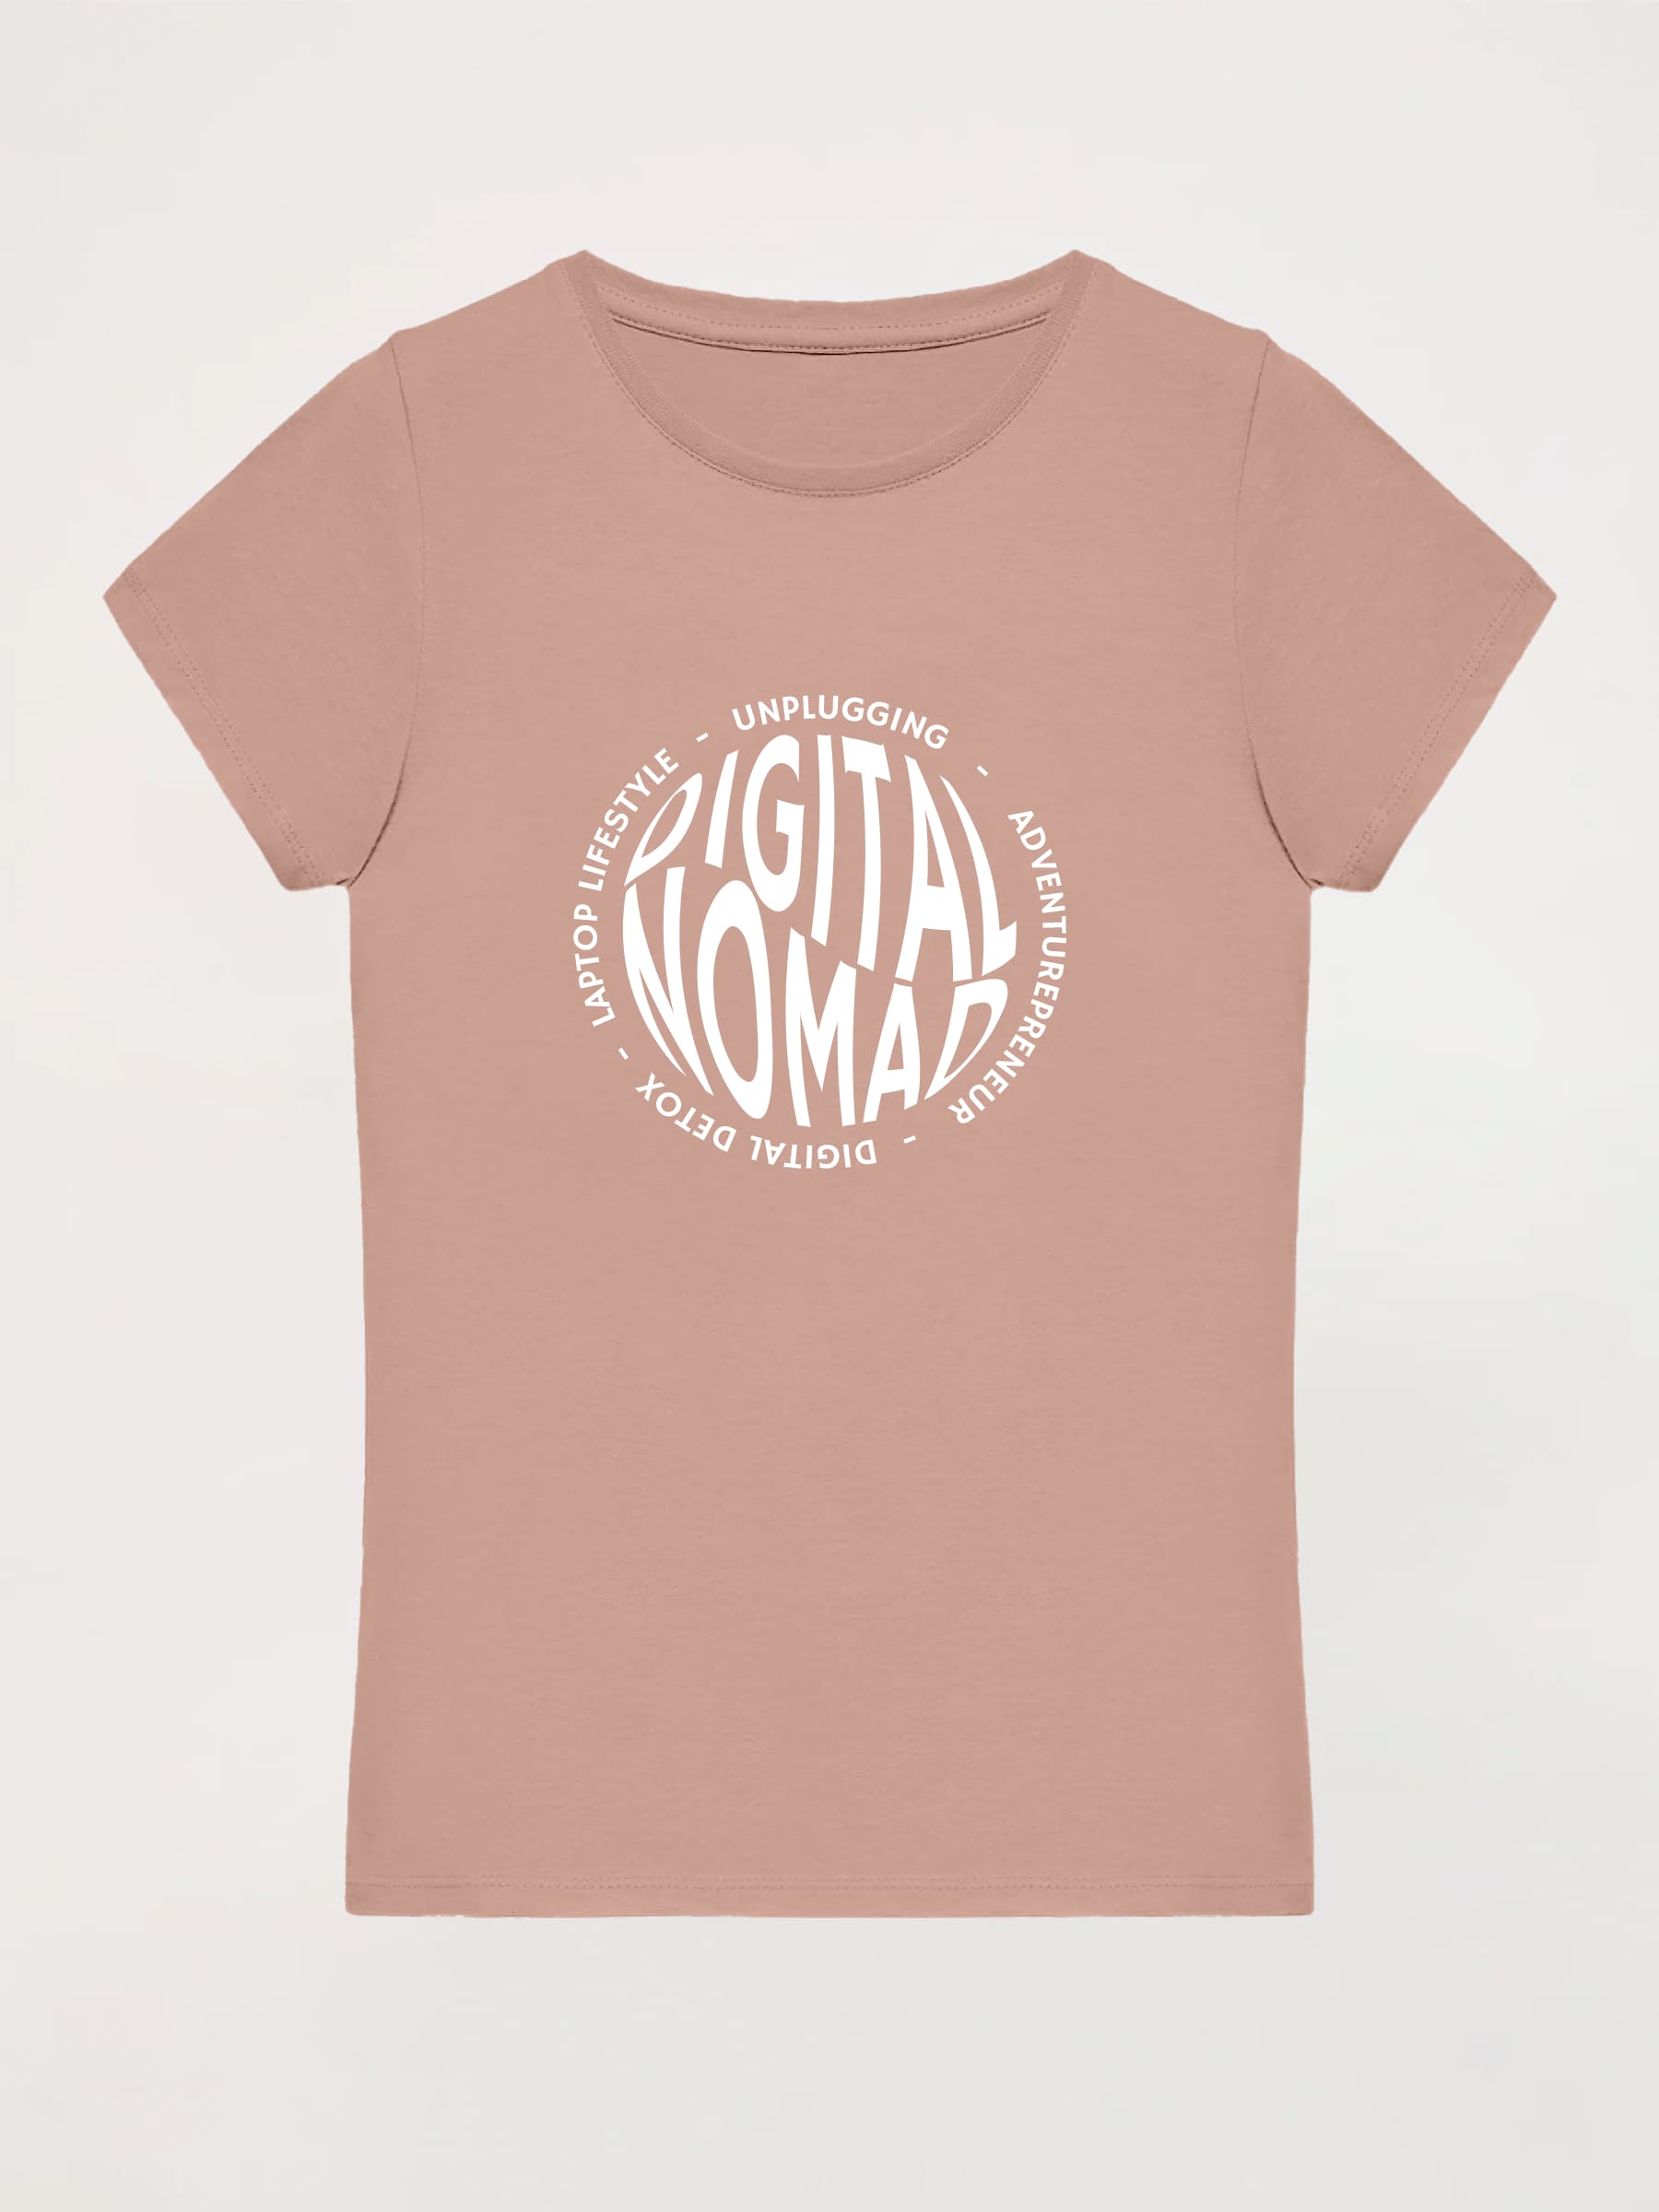 Camiseta mujer Digital Nomad